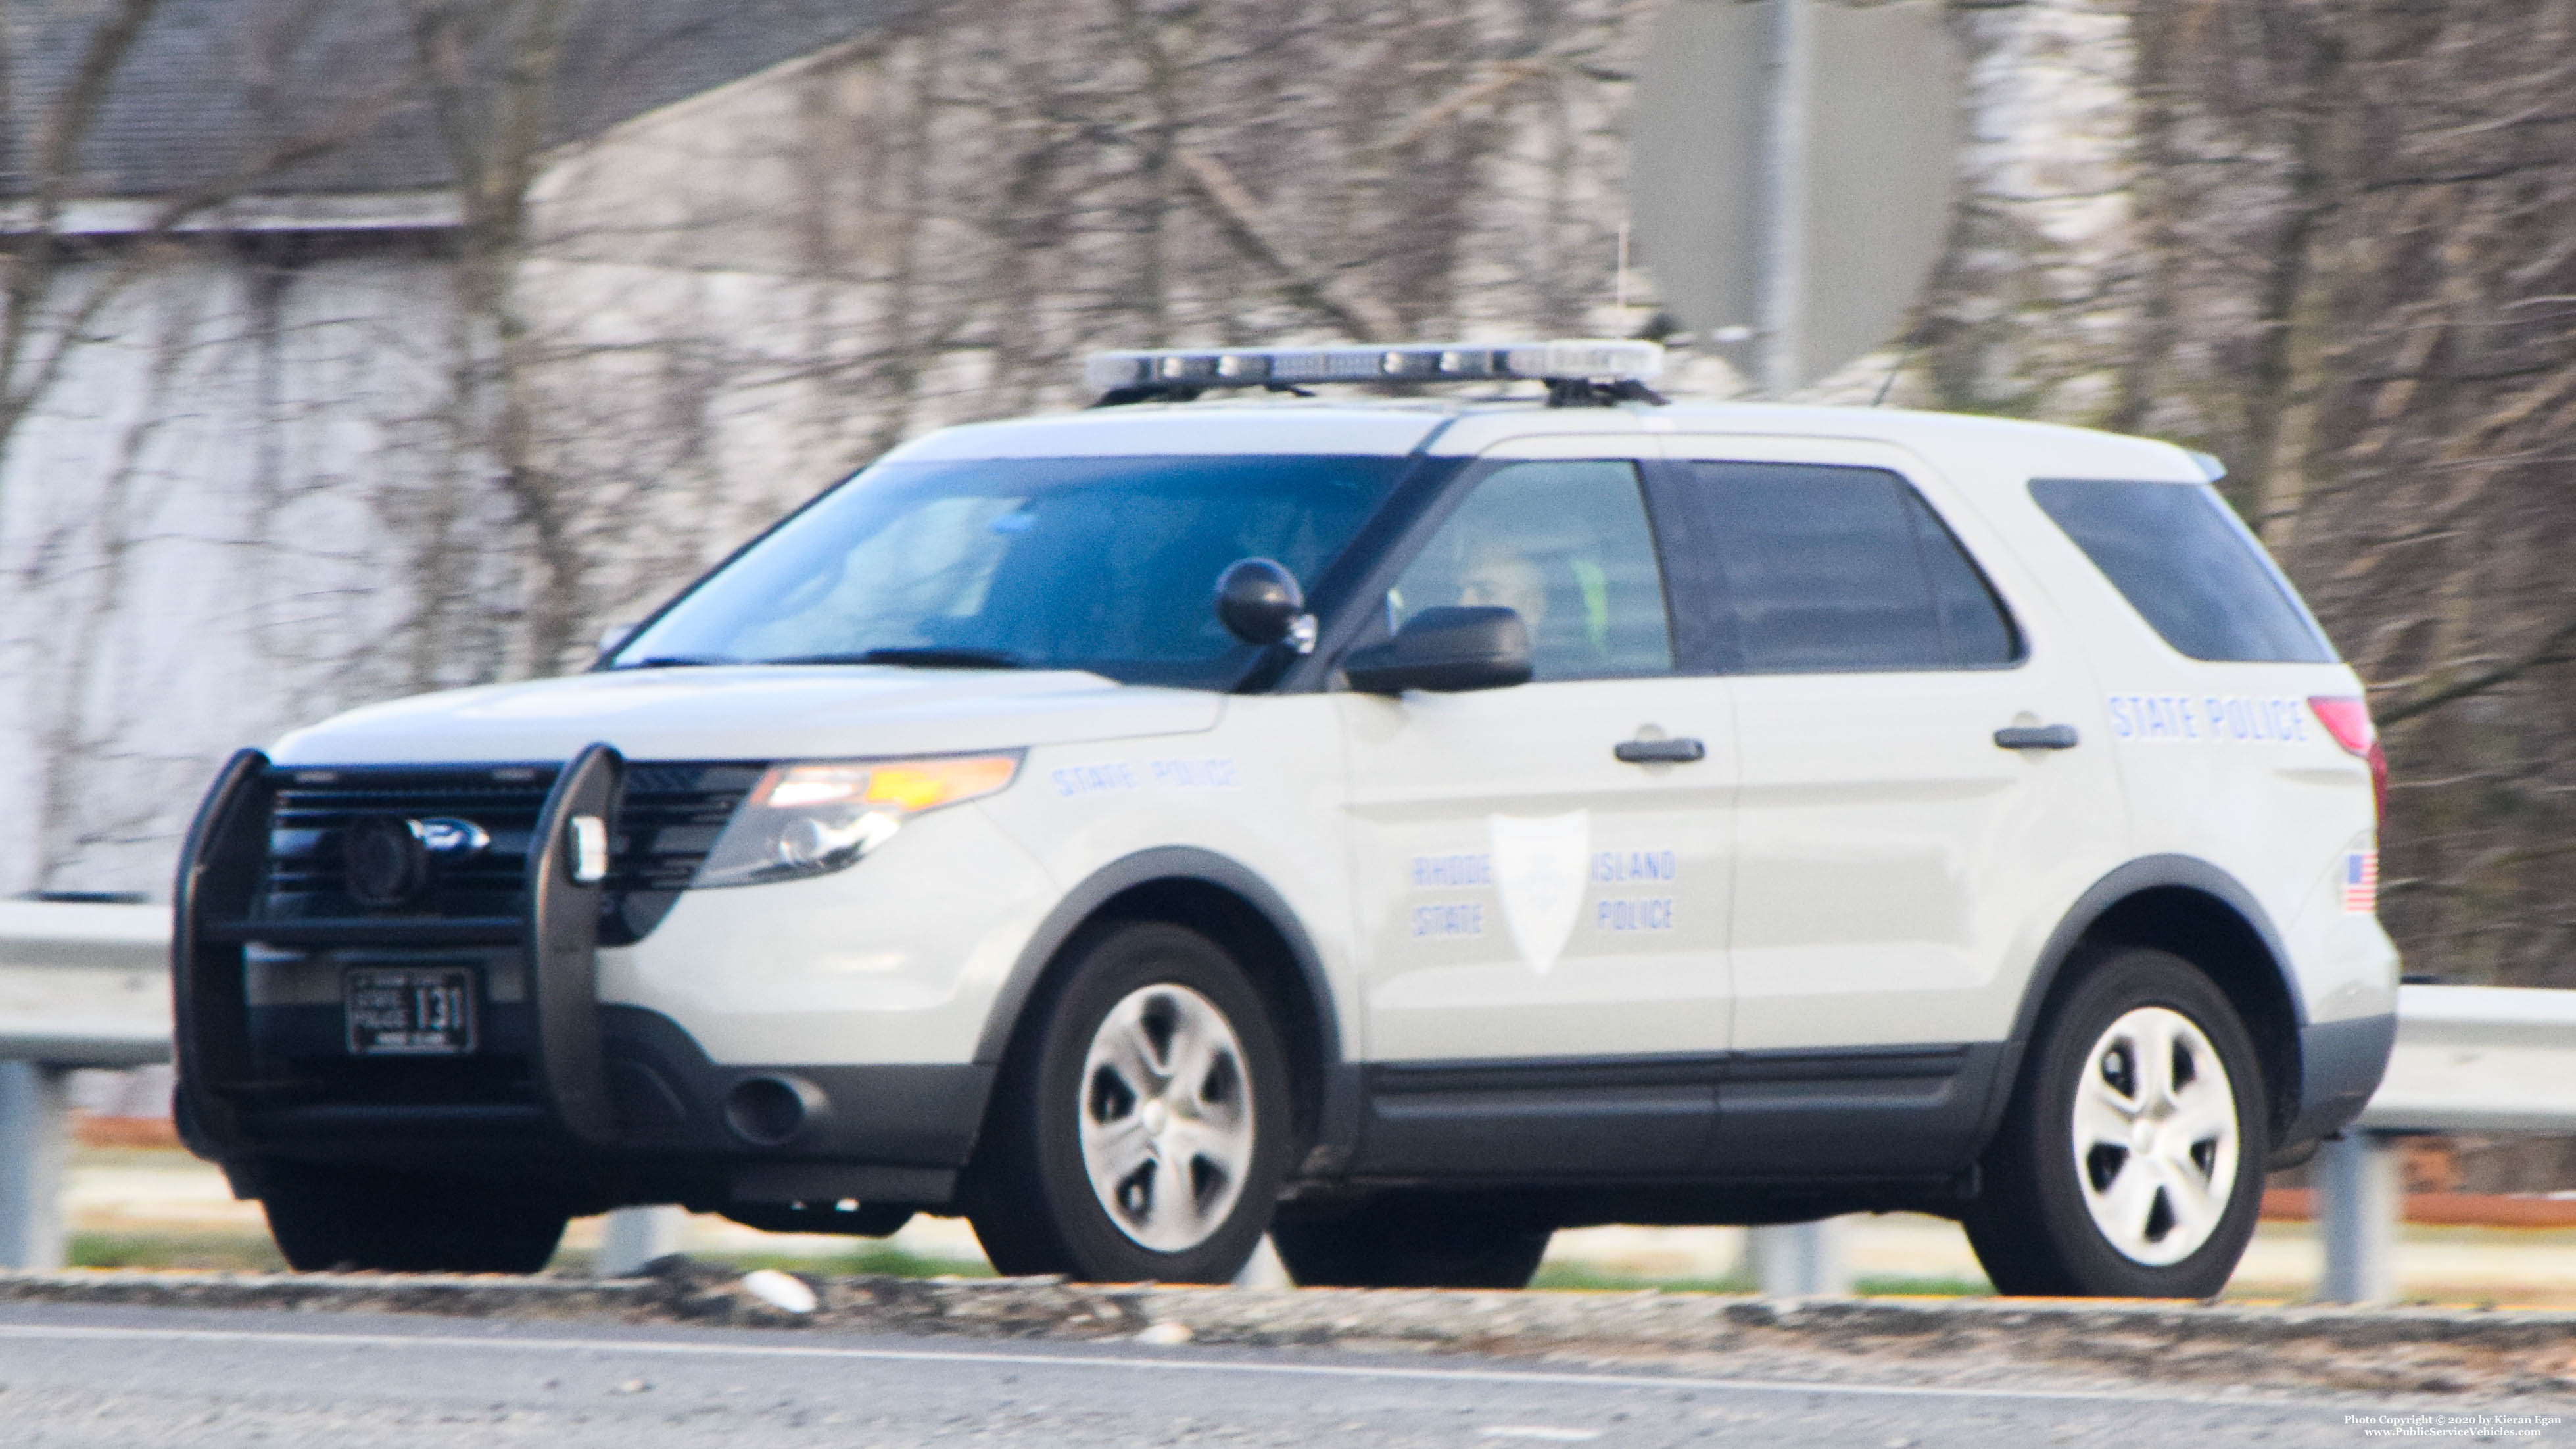 A photo  of Rhode Island State Police
            Cruiser 131, a 2013 Ford Police Interceptor Utility             taken by Kieran Egan